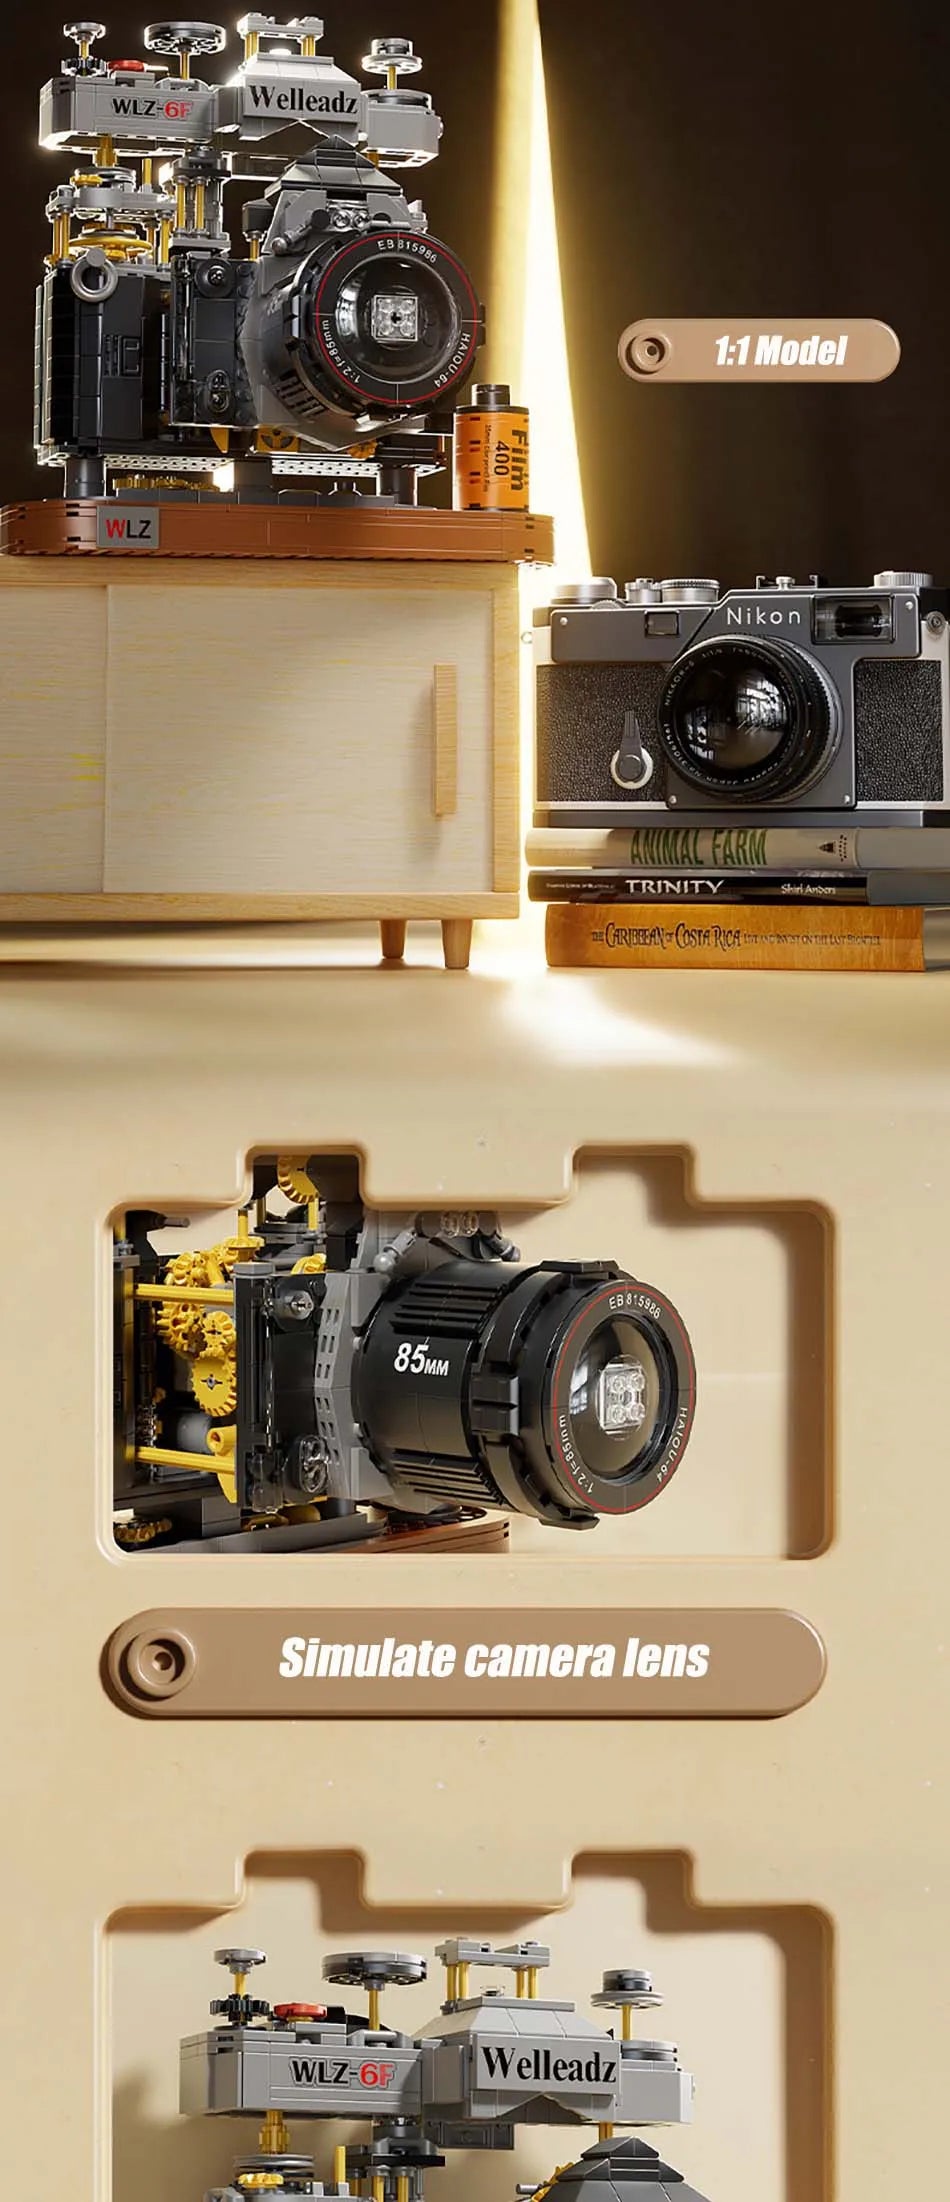 Retro feelings film camera series, Welleadz 11 Model 3 WLZ Nikon FArL TRINITv